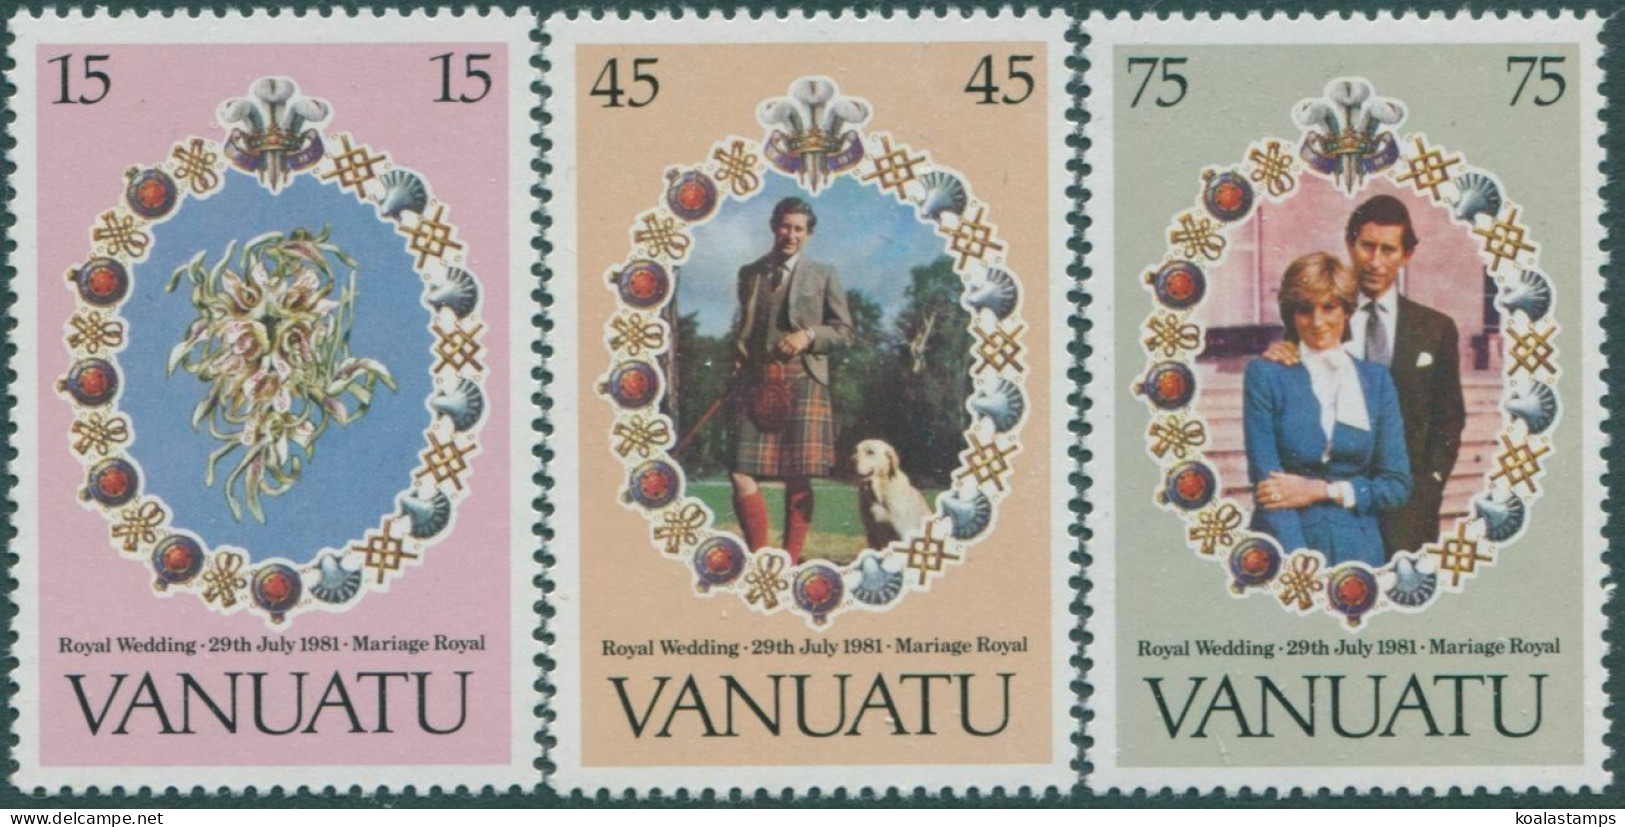 Vanuatu 1981 SG315-317 Royal Wedding Set MNH - Vanuatu (1980-...)